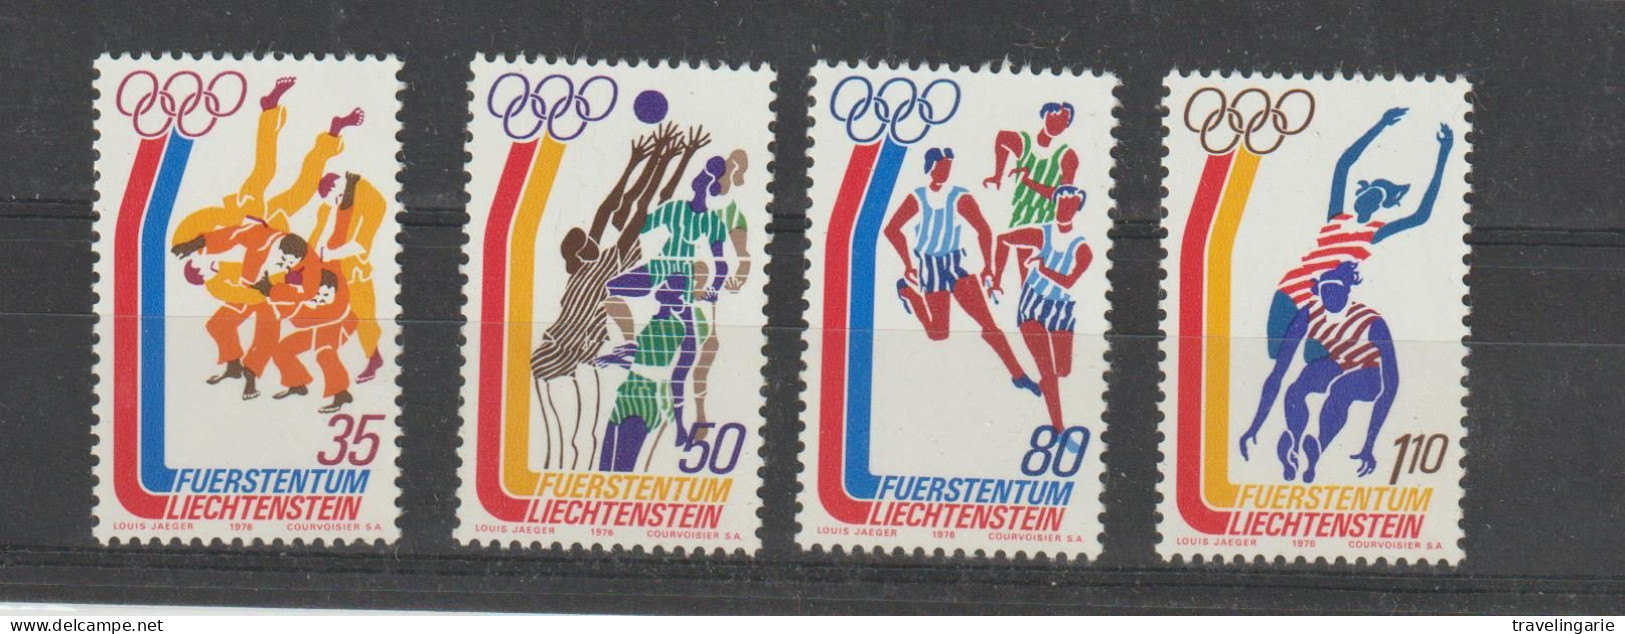 Liechtenstein 1976 Olympic Games Montreal MNH ** - Sommer 1976: Montreal